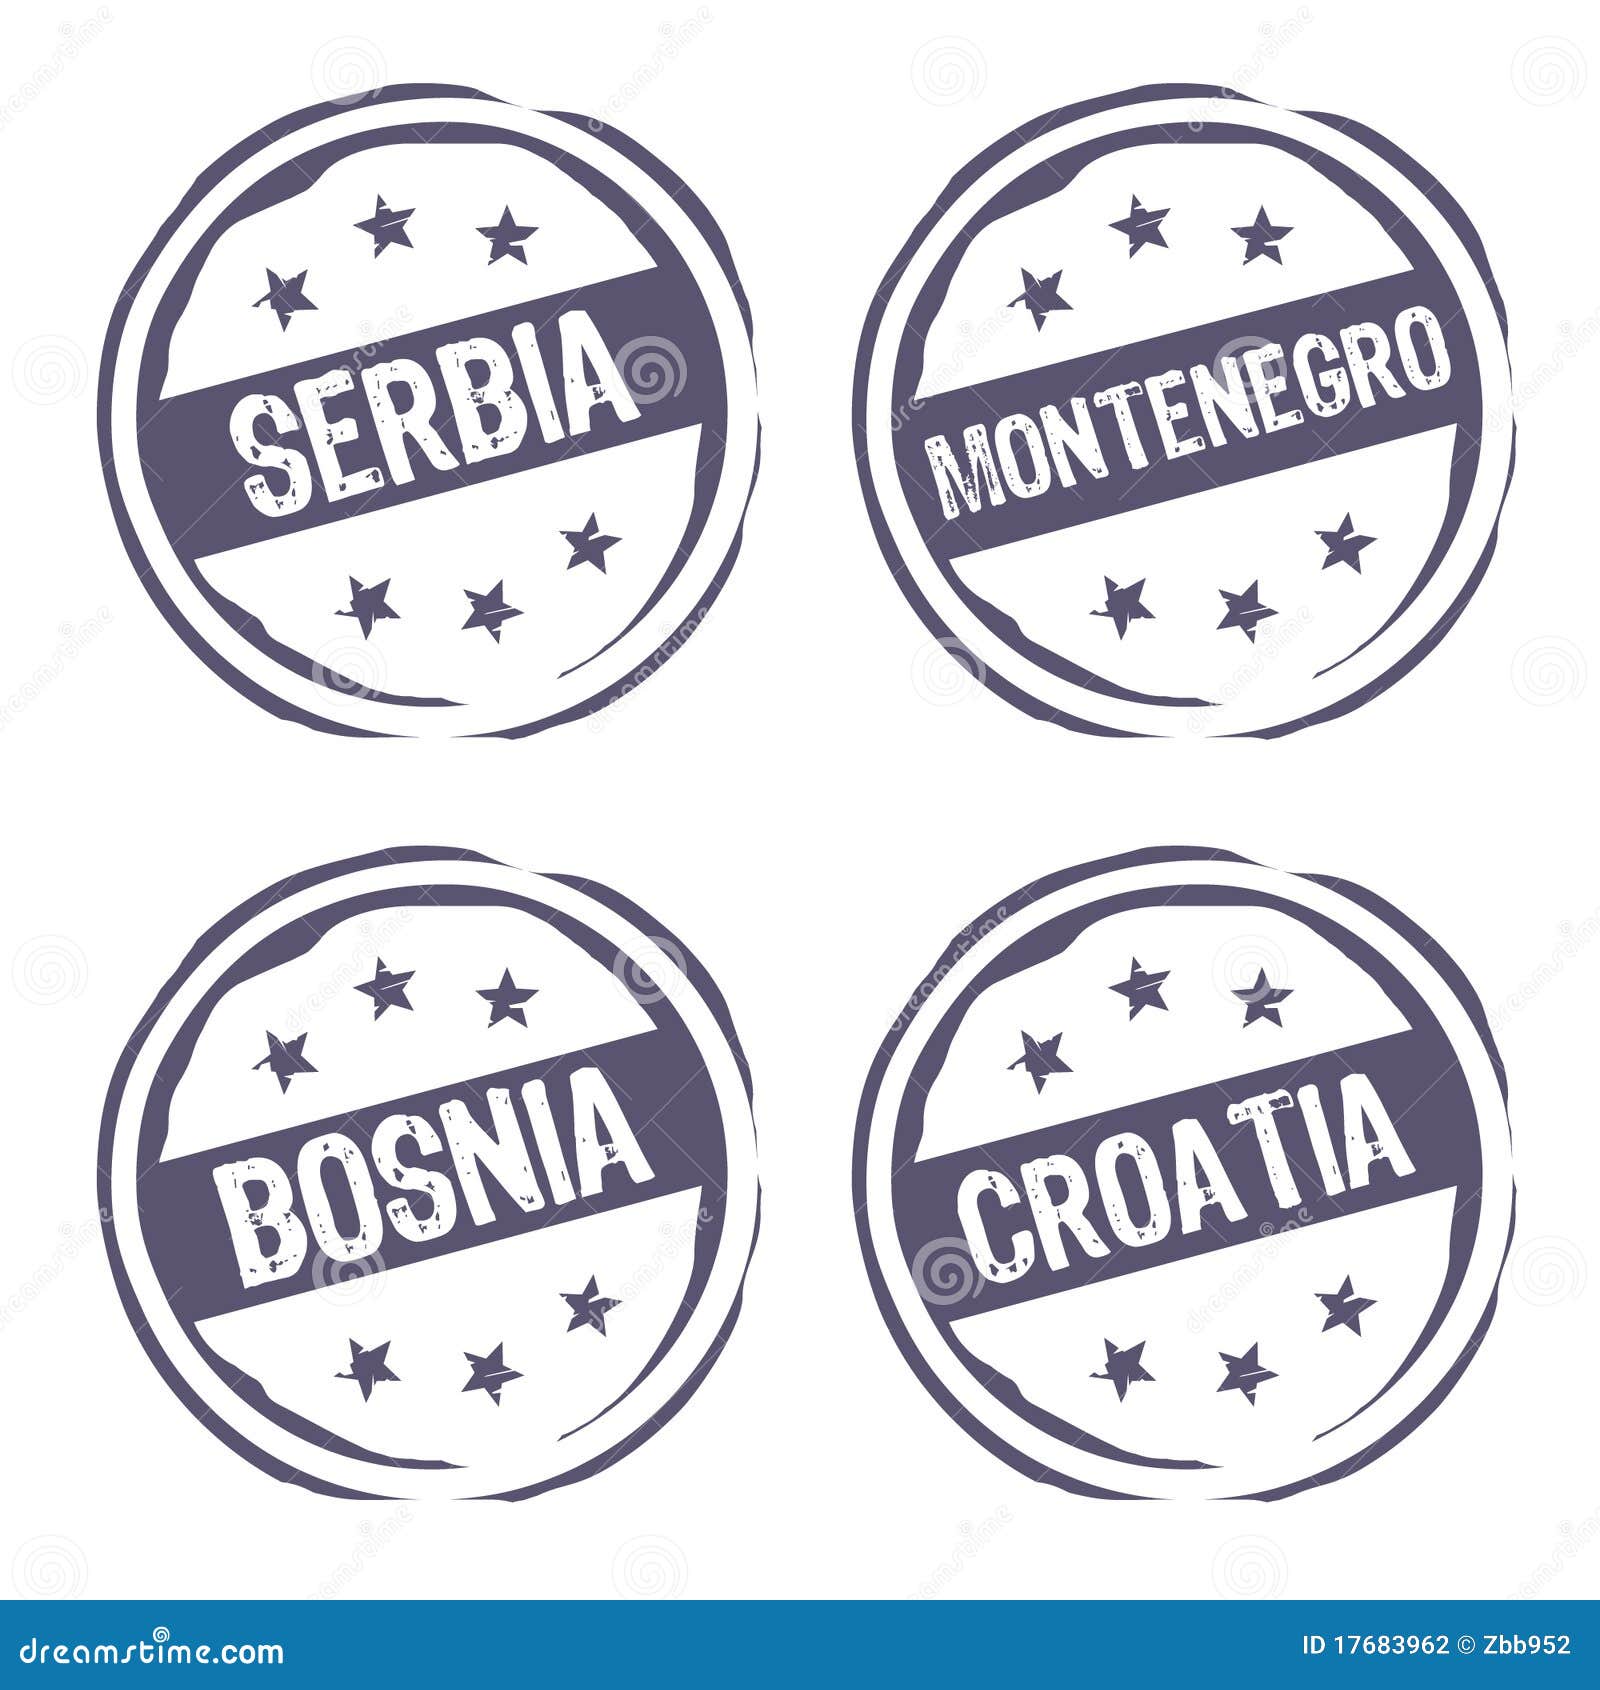 serbia, croatia, bosnia and montenegro